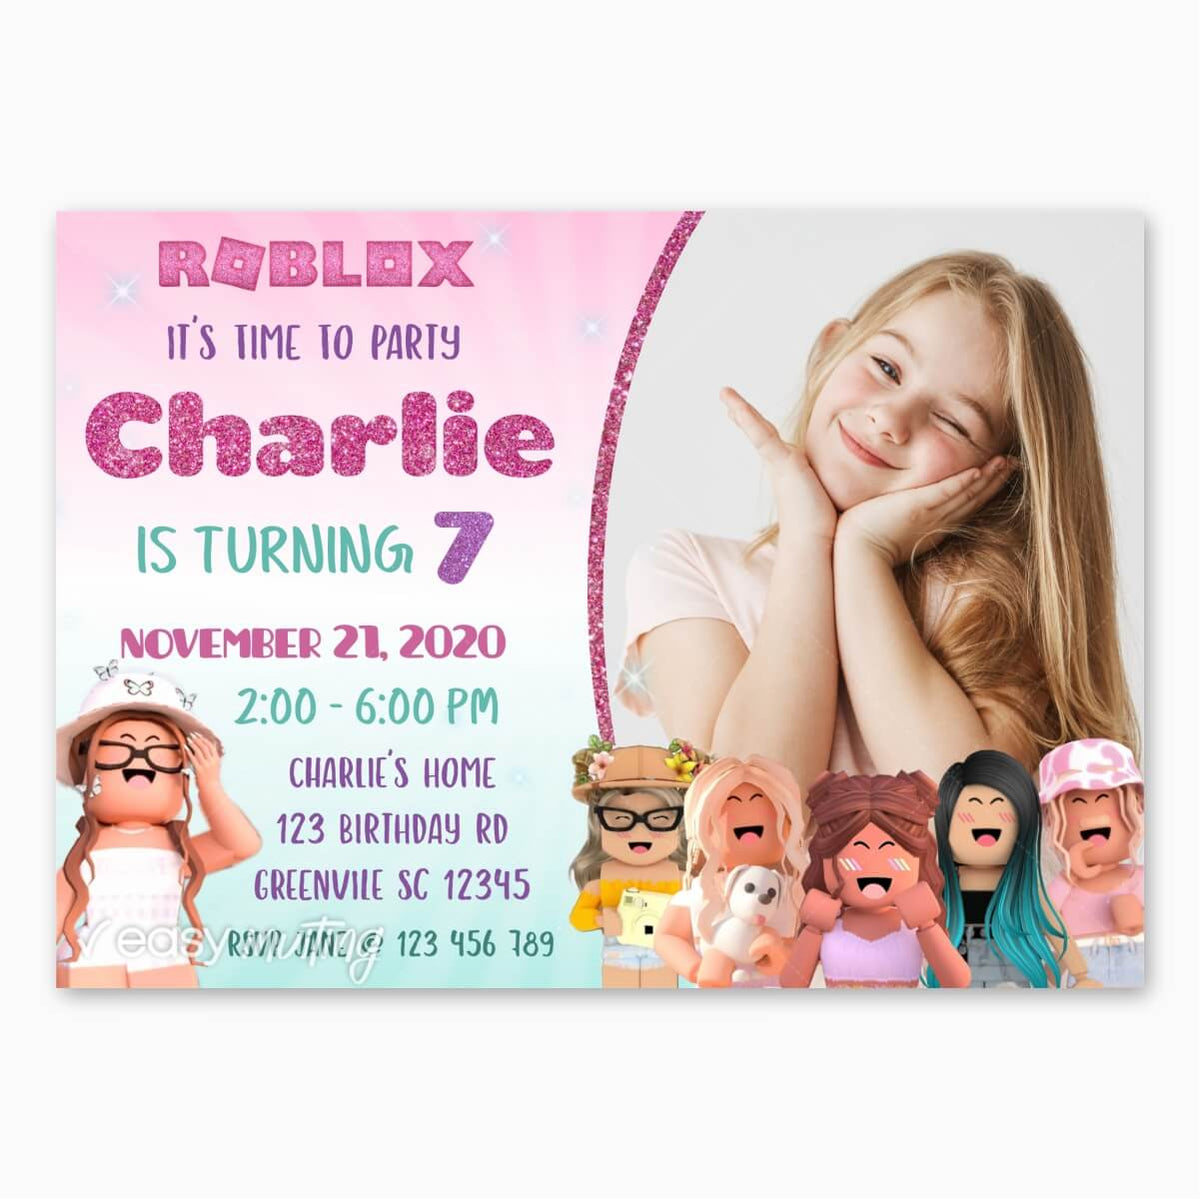 KIDS ROBLOX BIRTHDAY INVITATION TEMPLATE